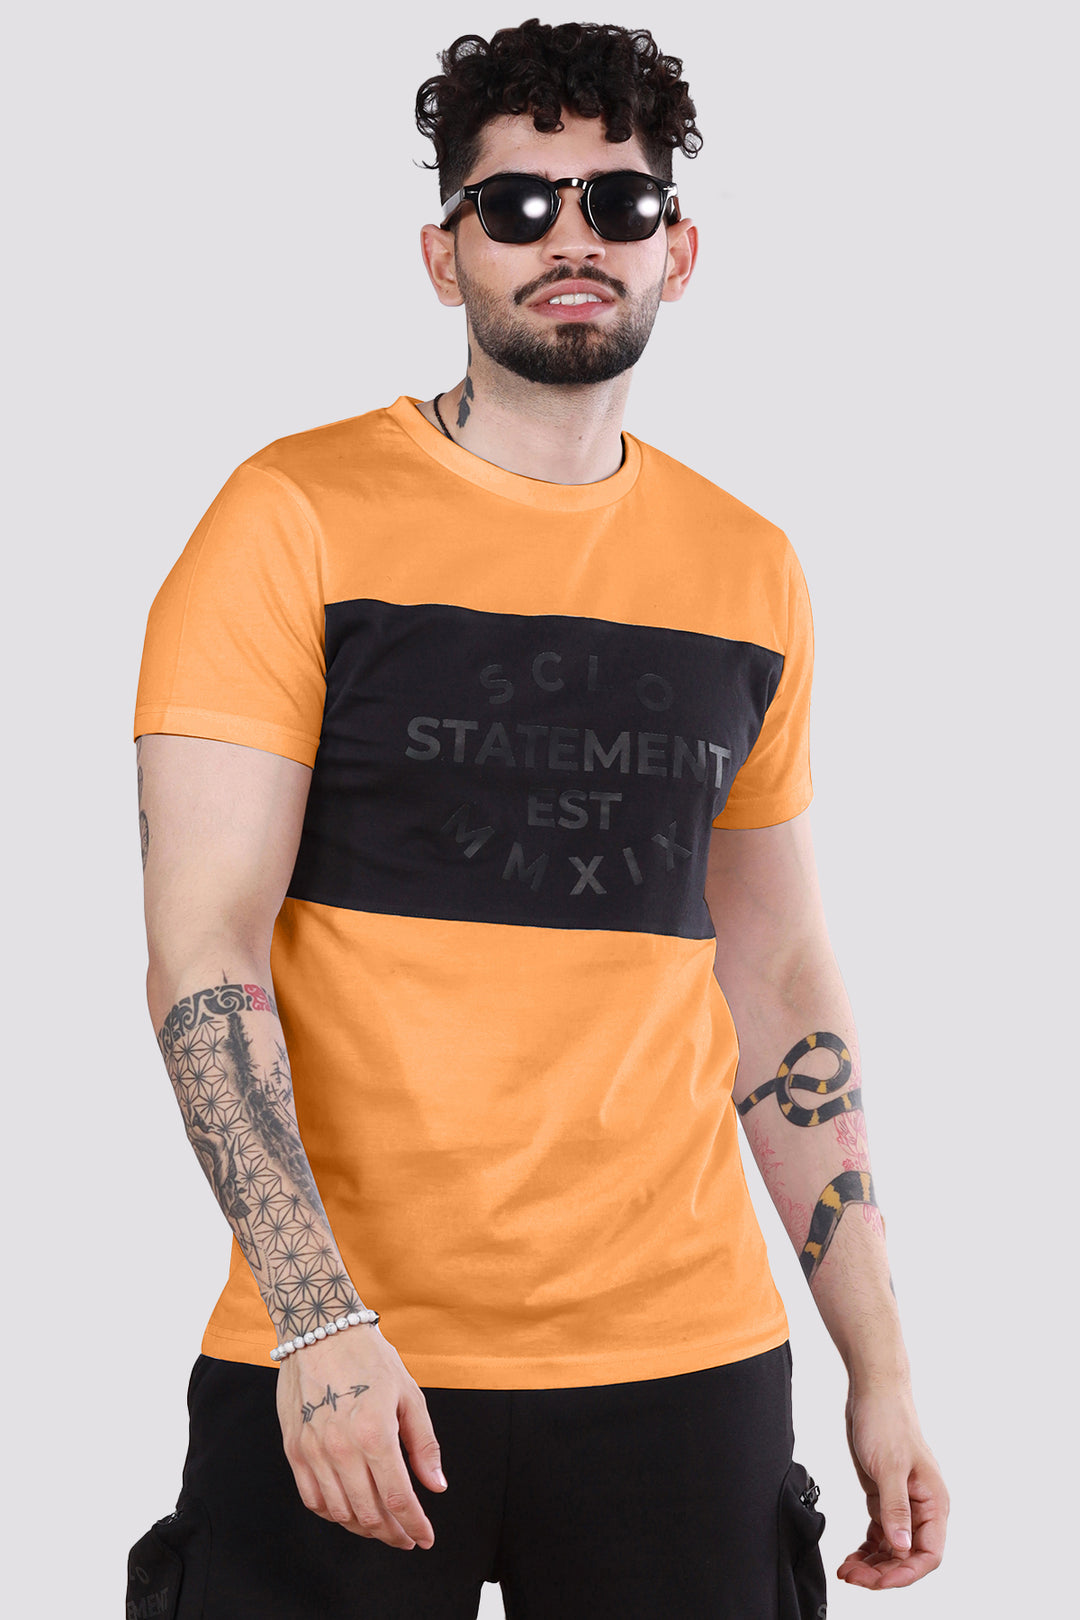 Orange SCLO Statement T-Shirt - S23 - MT0301R